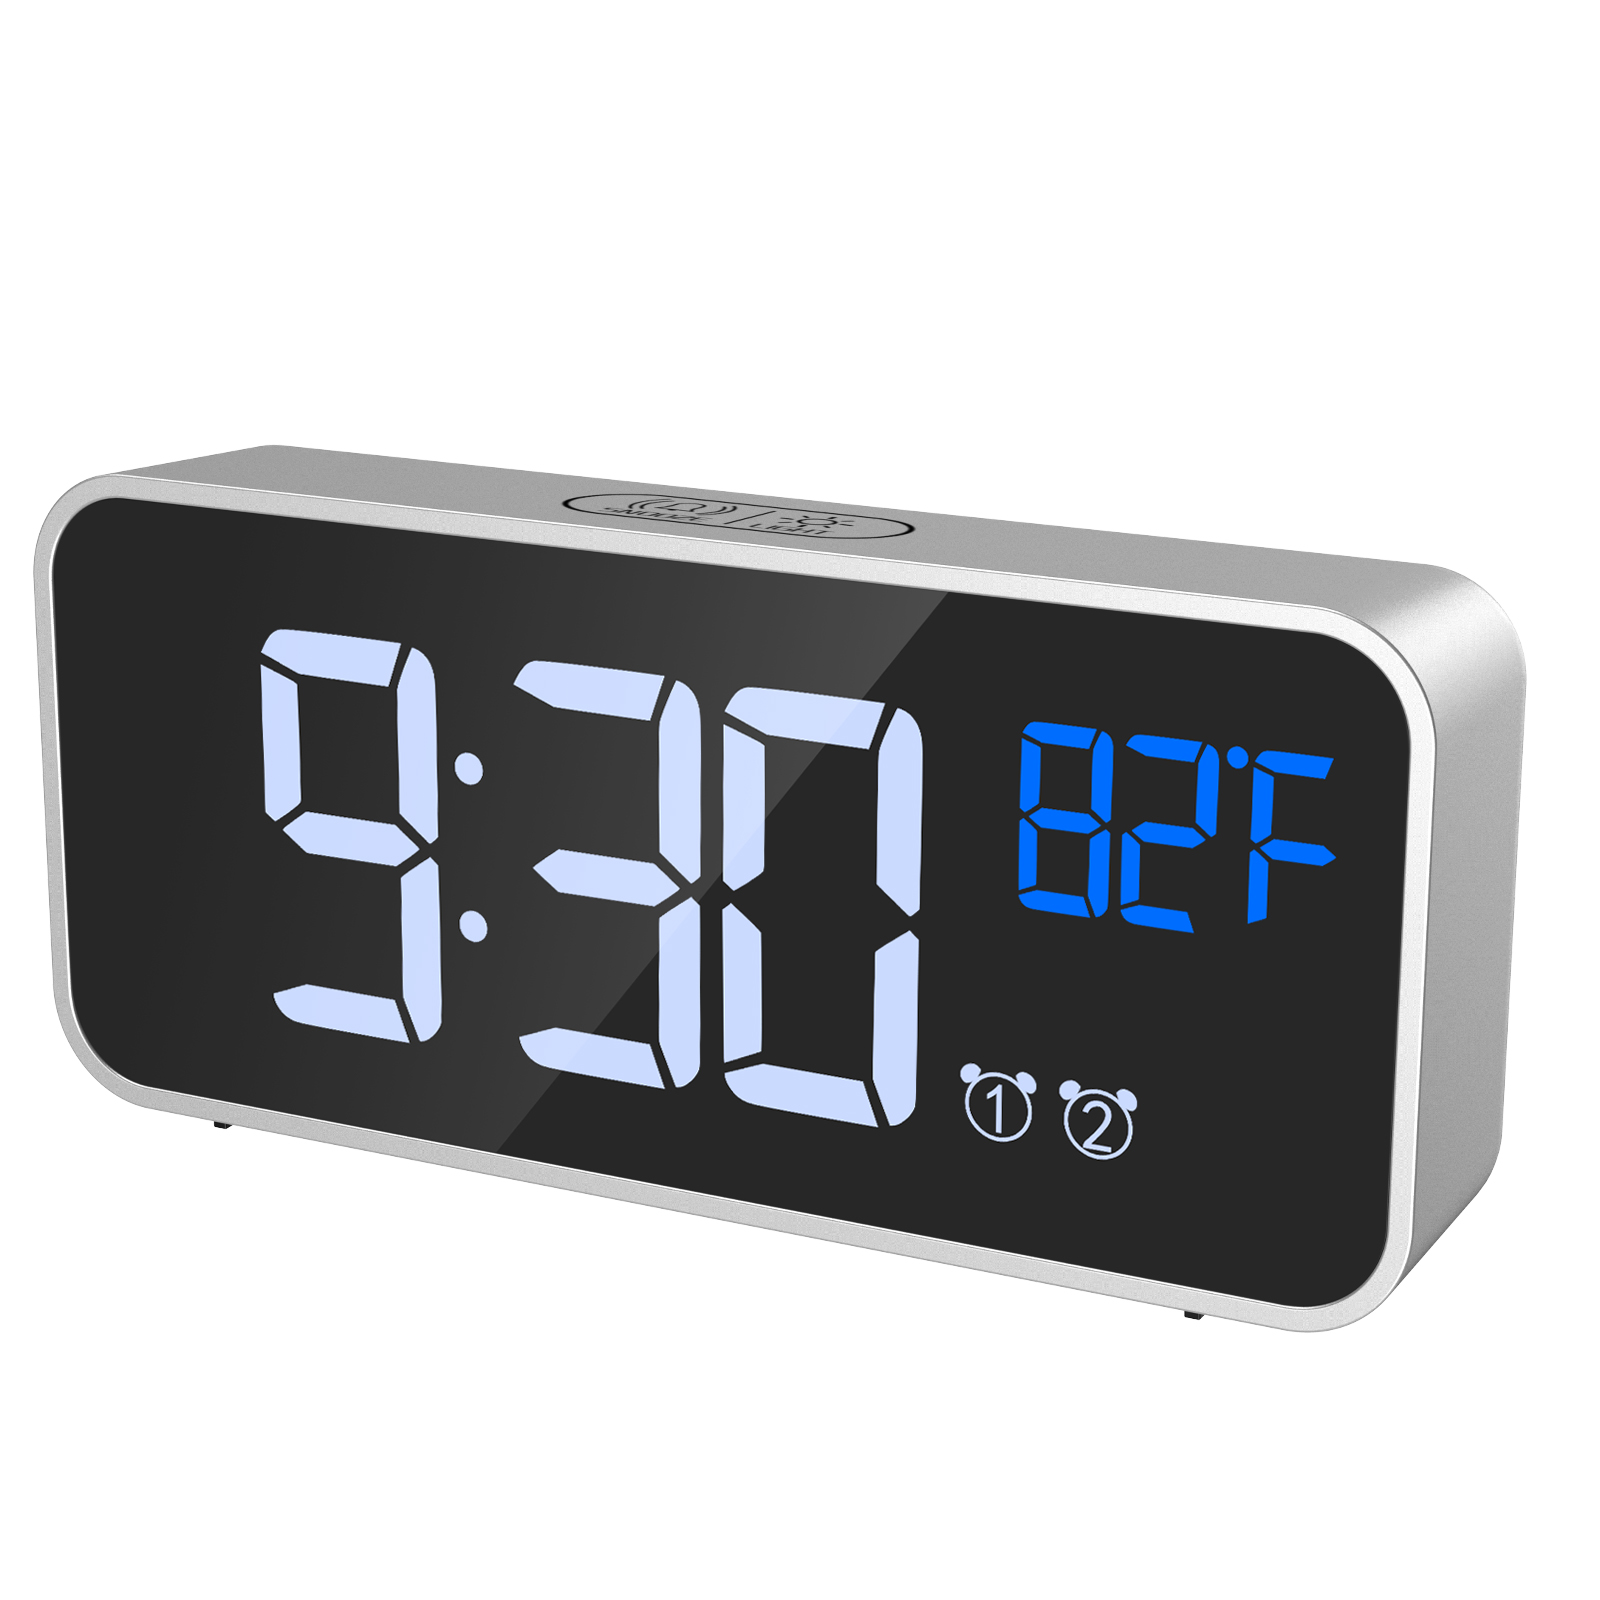 Grand écran LCD numérique 3D DEL Mur De Bureau Horloge usb 12/24 Heure Dispaly alarme snooze Bon état 